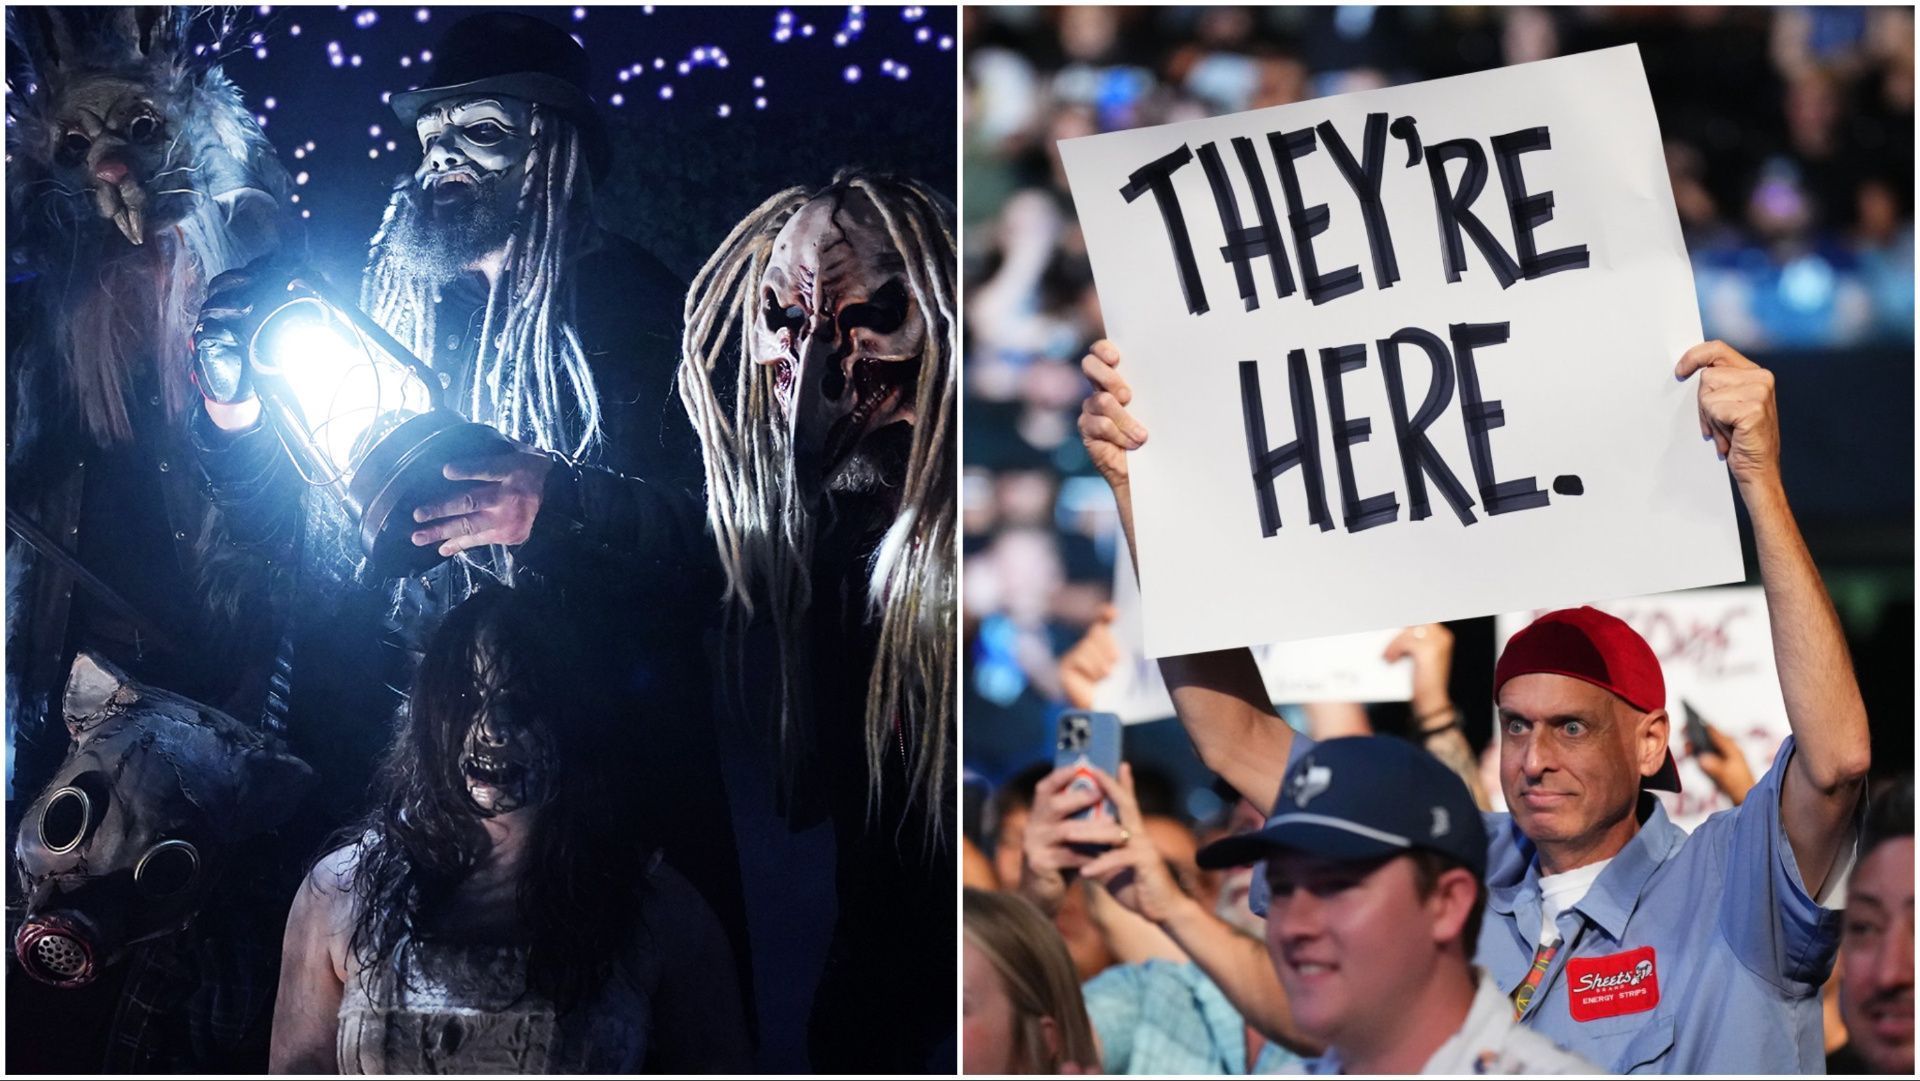 The Wyatt Sicks arrive on WWE RAW, WWE fan shows sign for The Wyatt Sicks